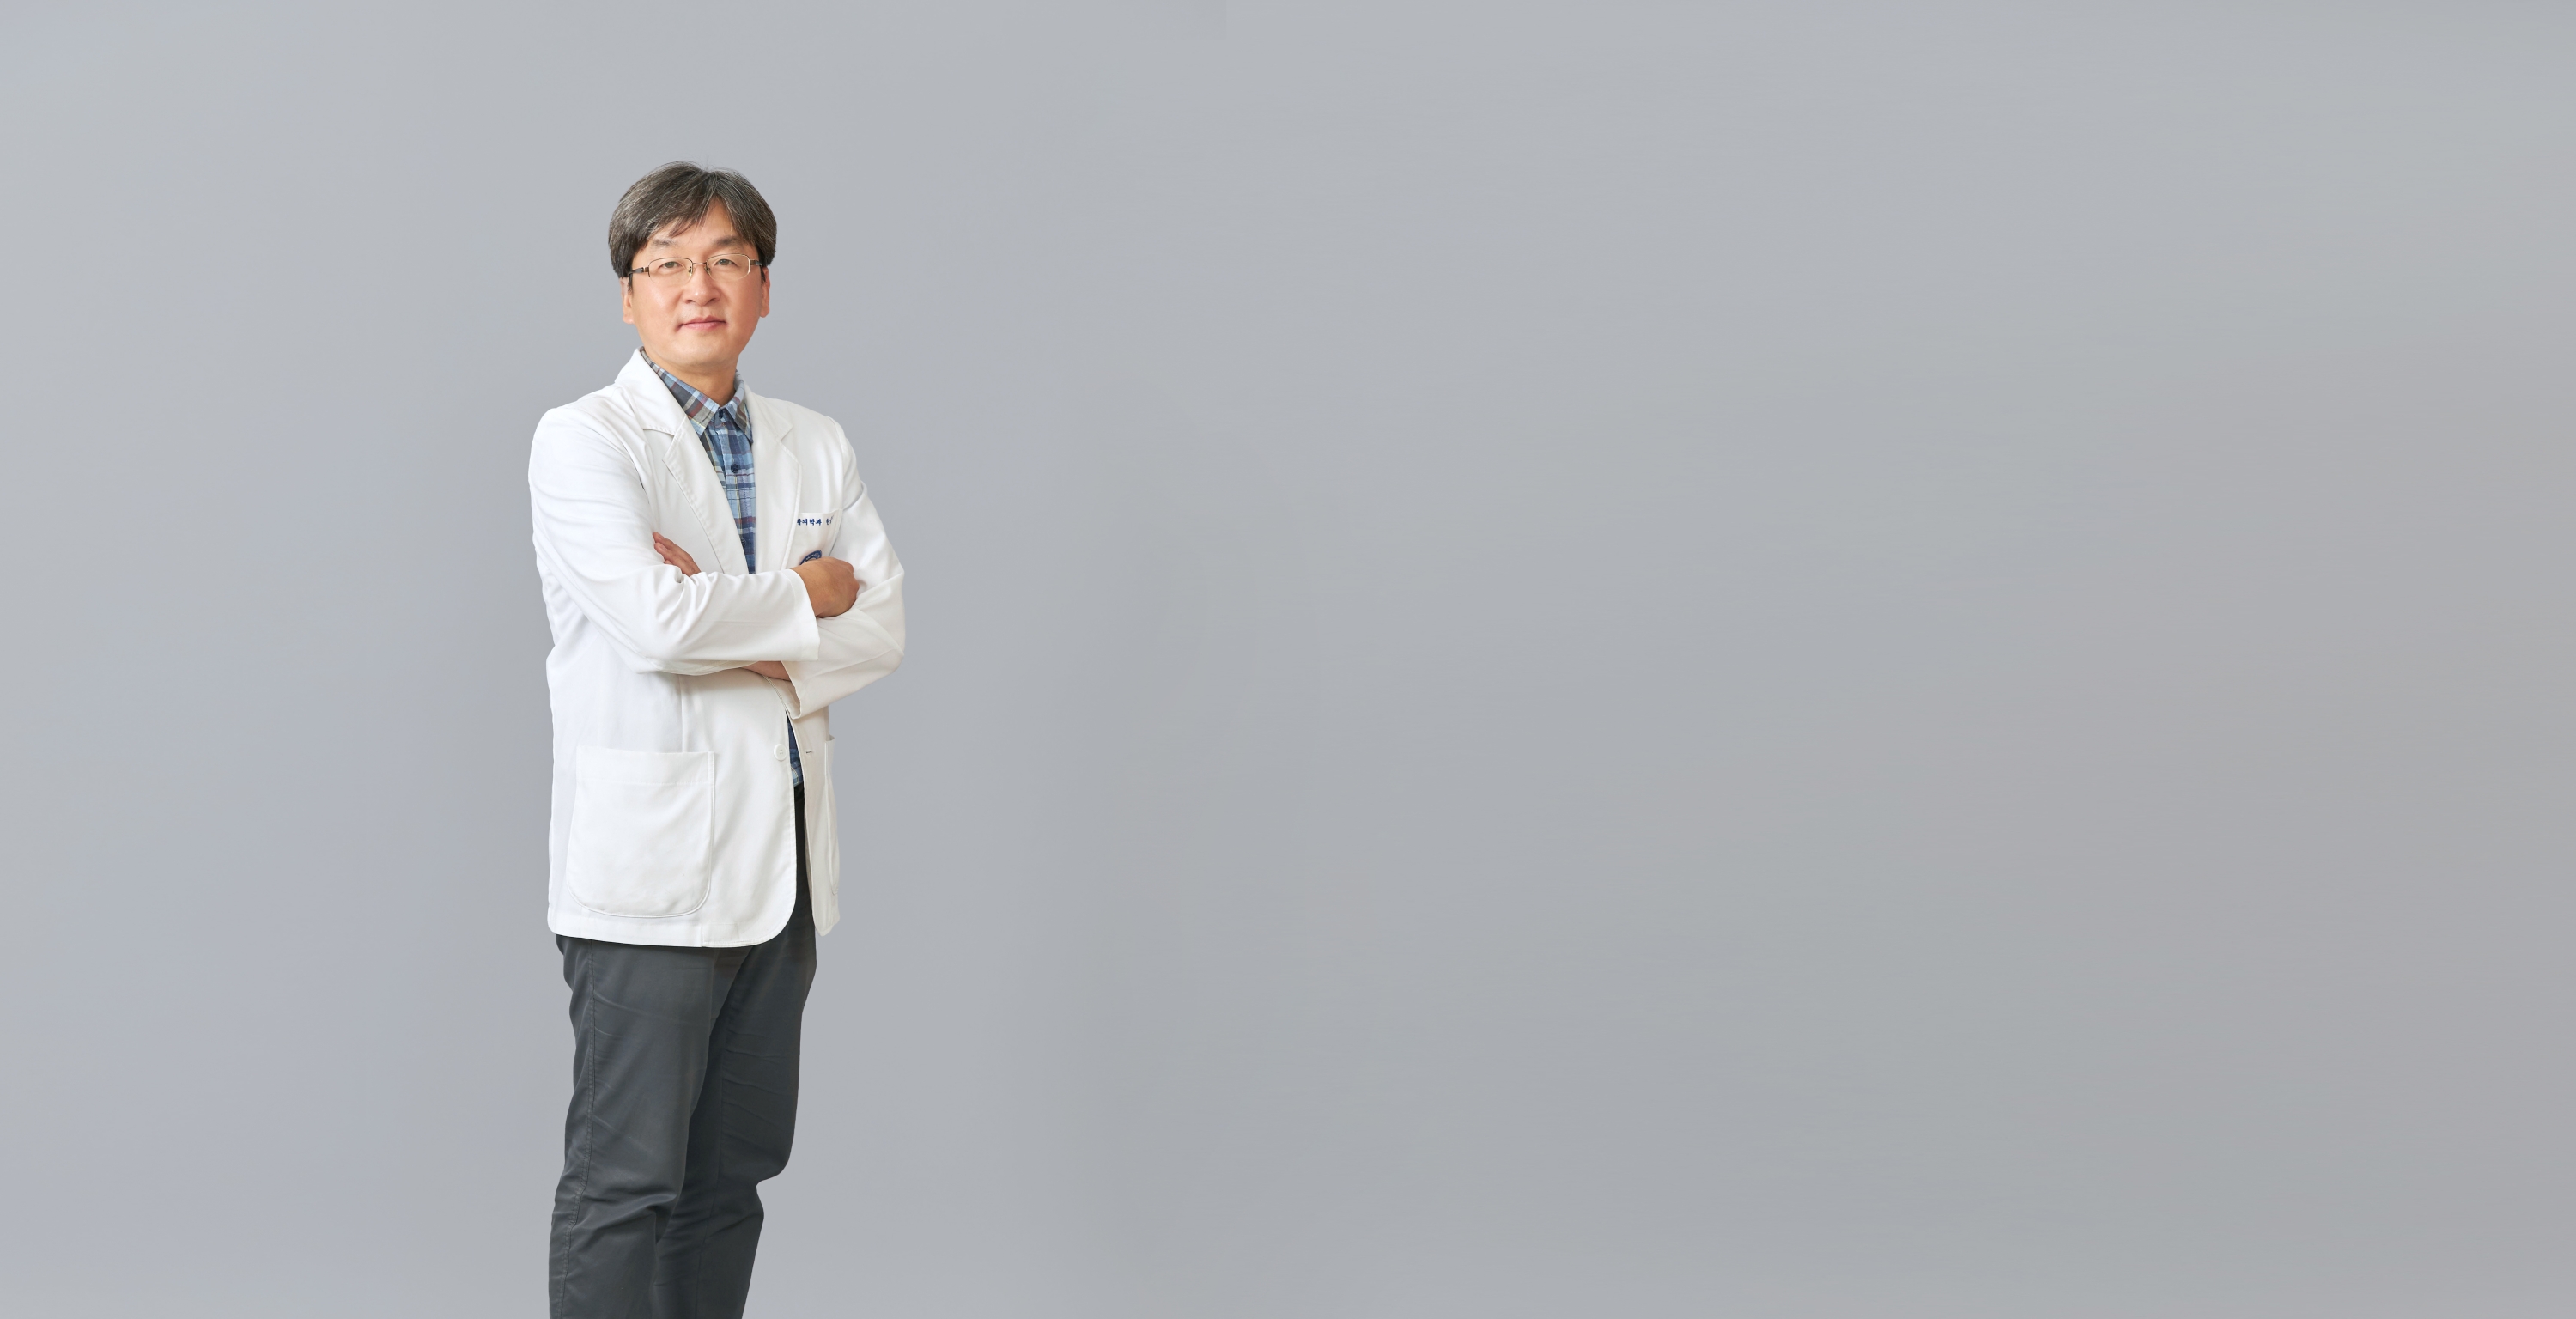 Physical medicine and rehabilitation - Han, Seung Hoon